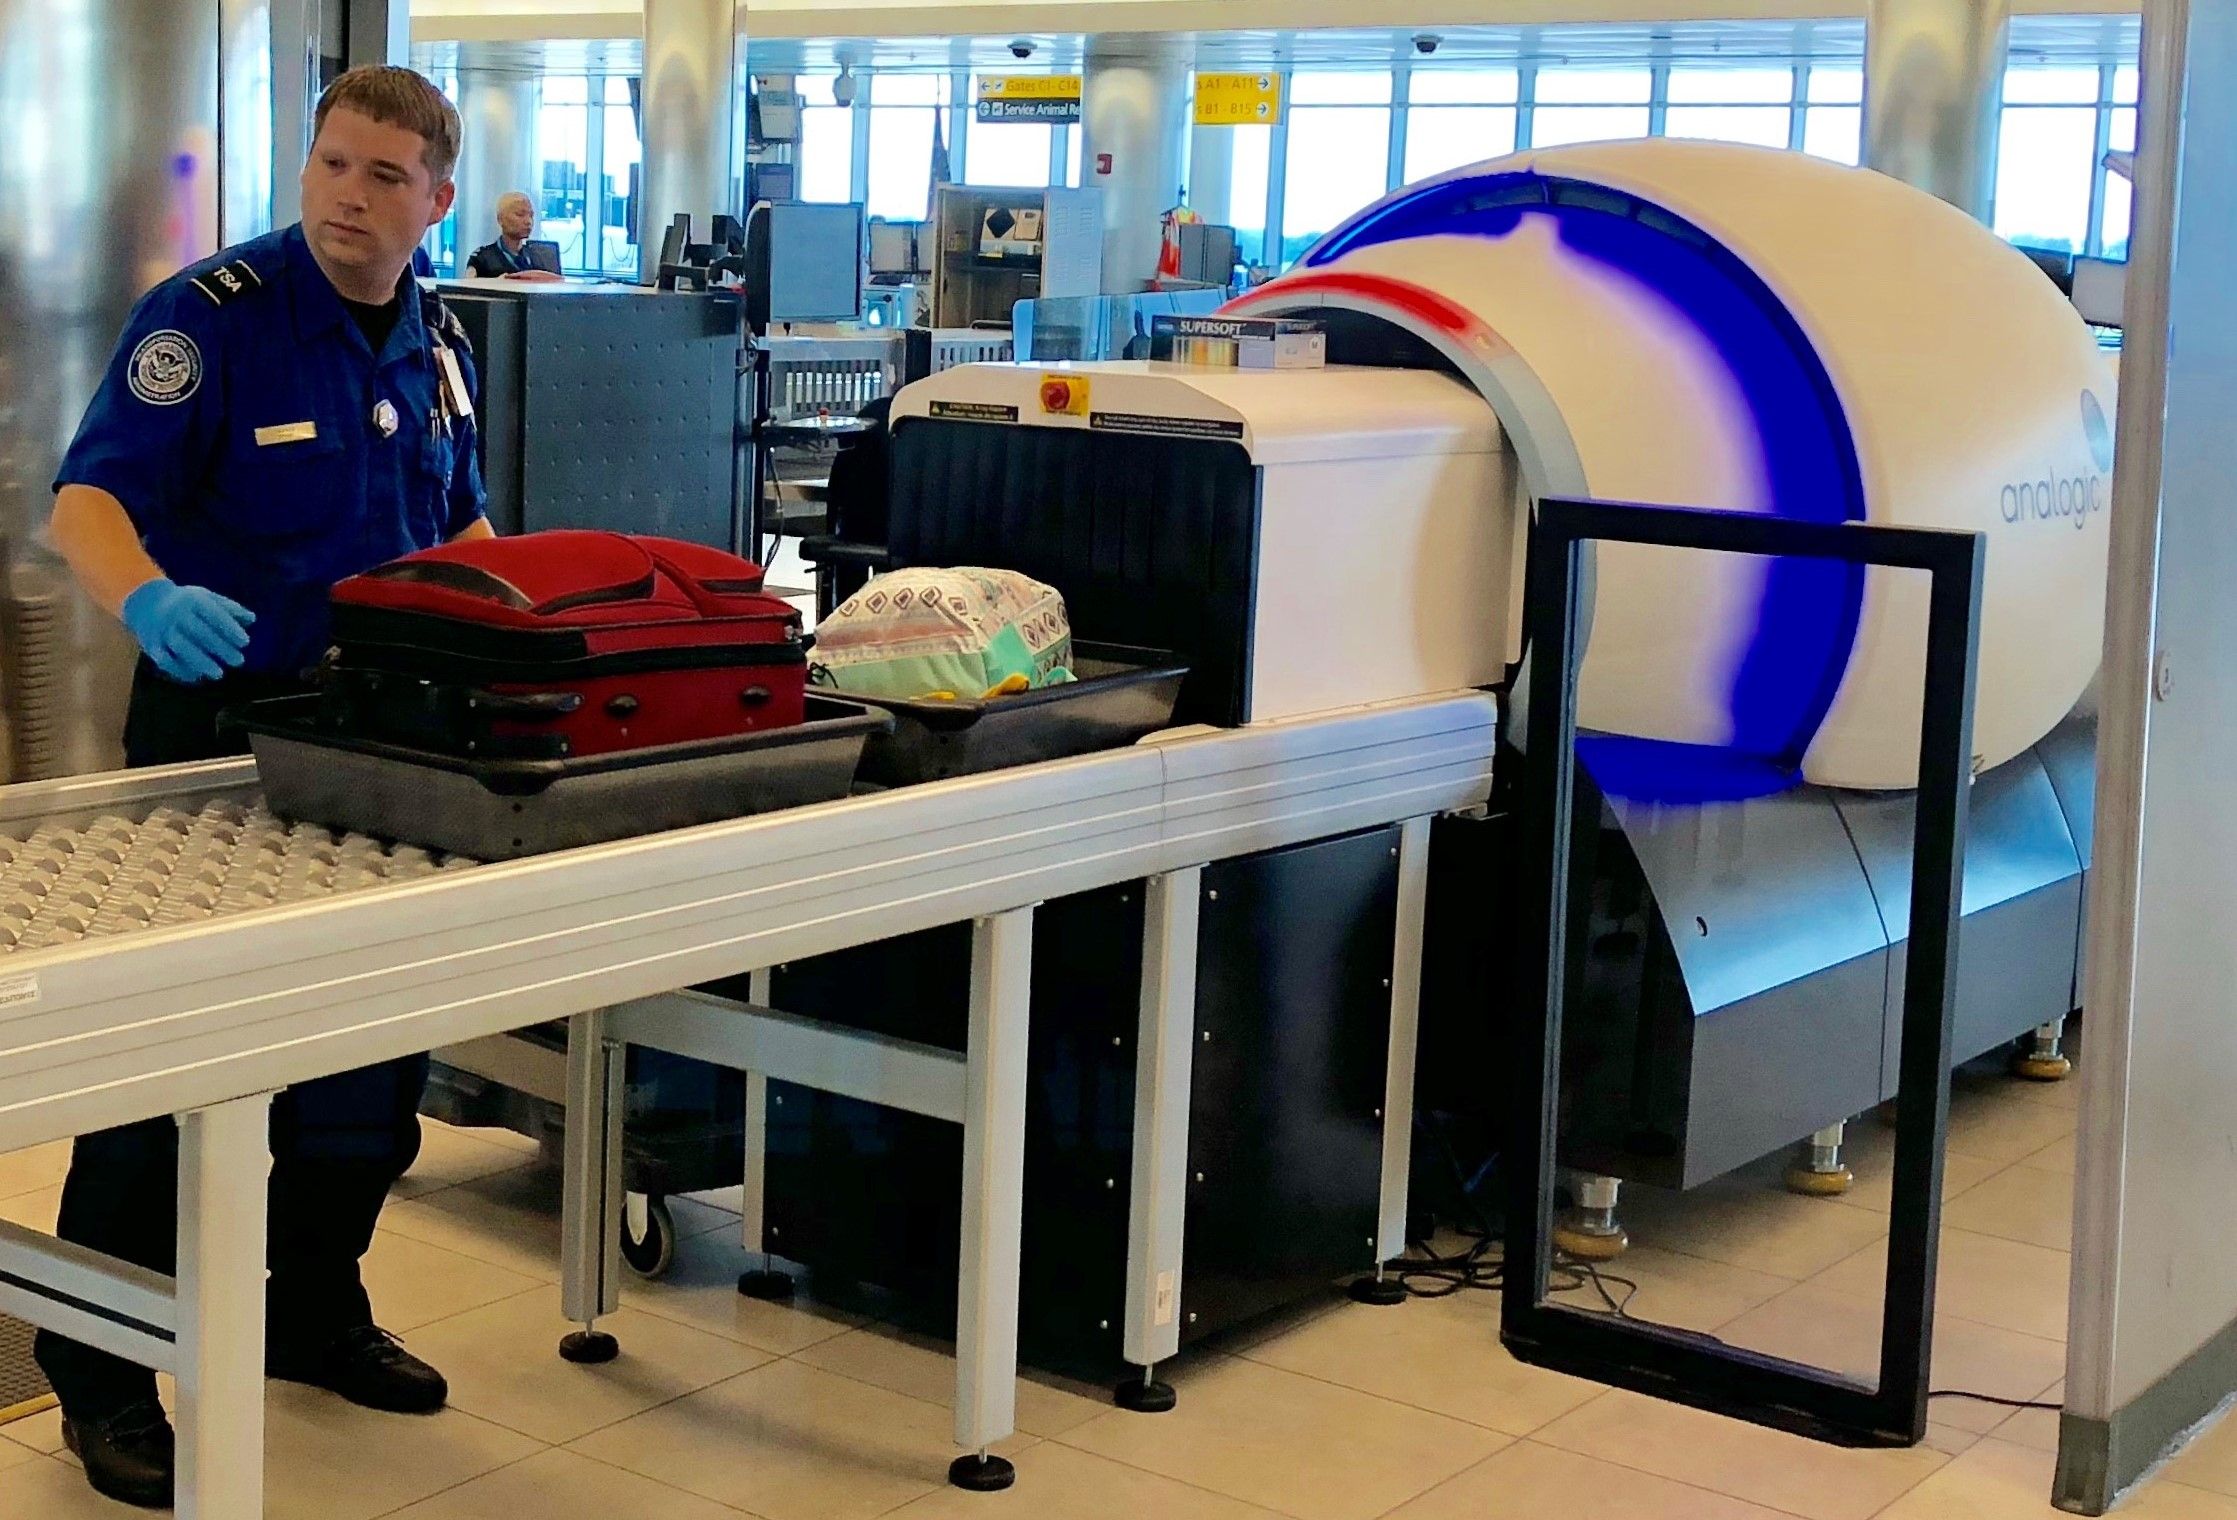 A TSA employee checking a screen as items go through an airport security CT scanner.